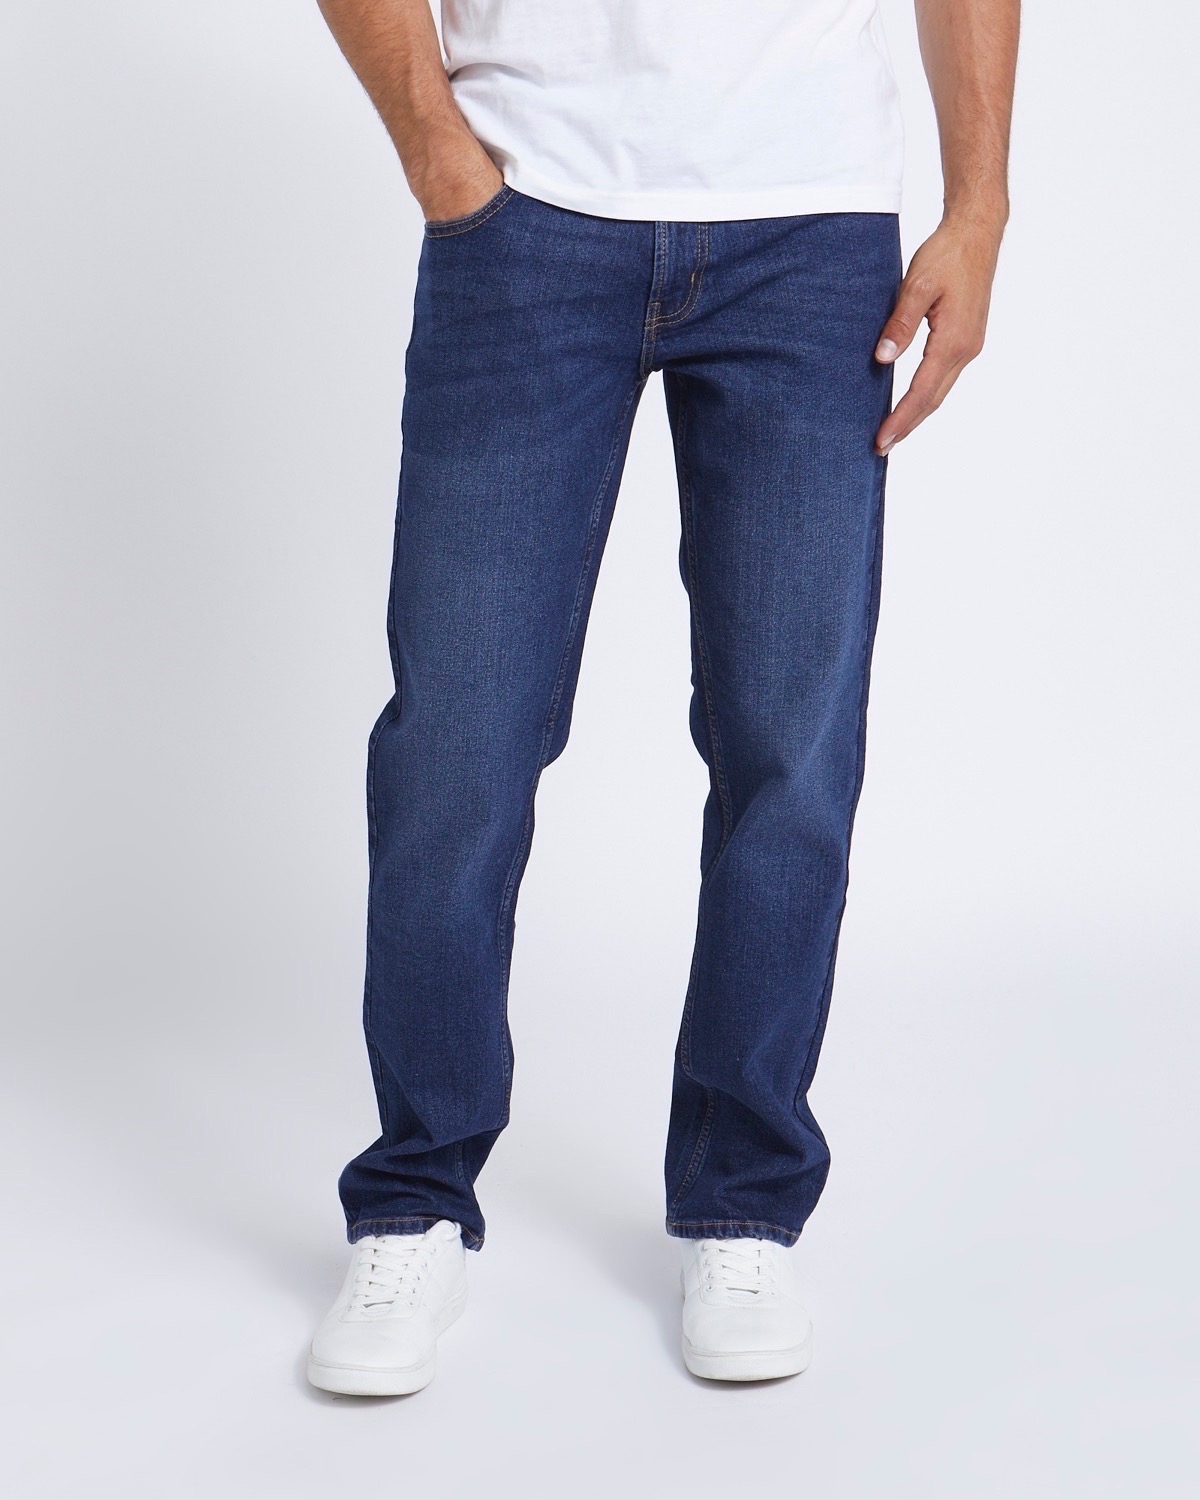 Men's elastic dark blue Denim trousers with zipper and button